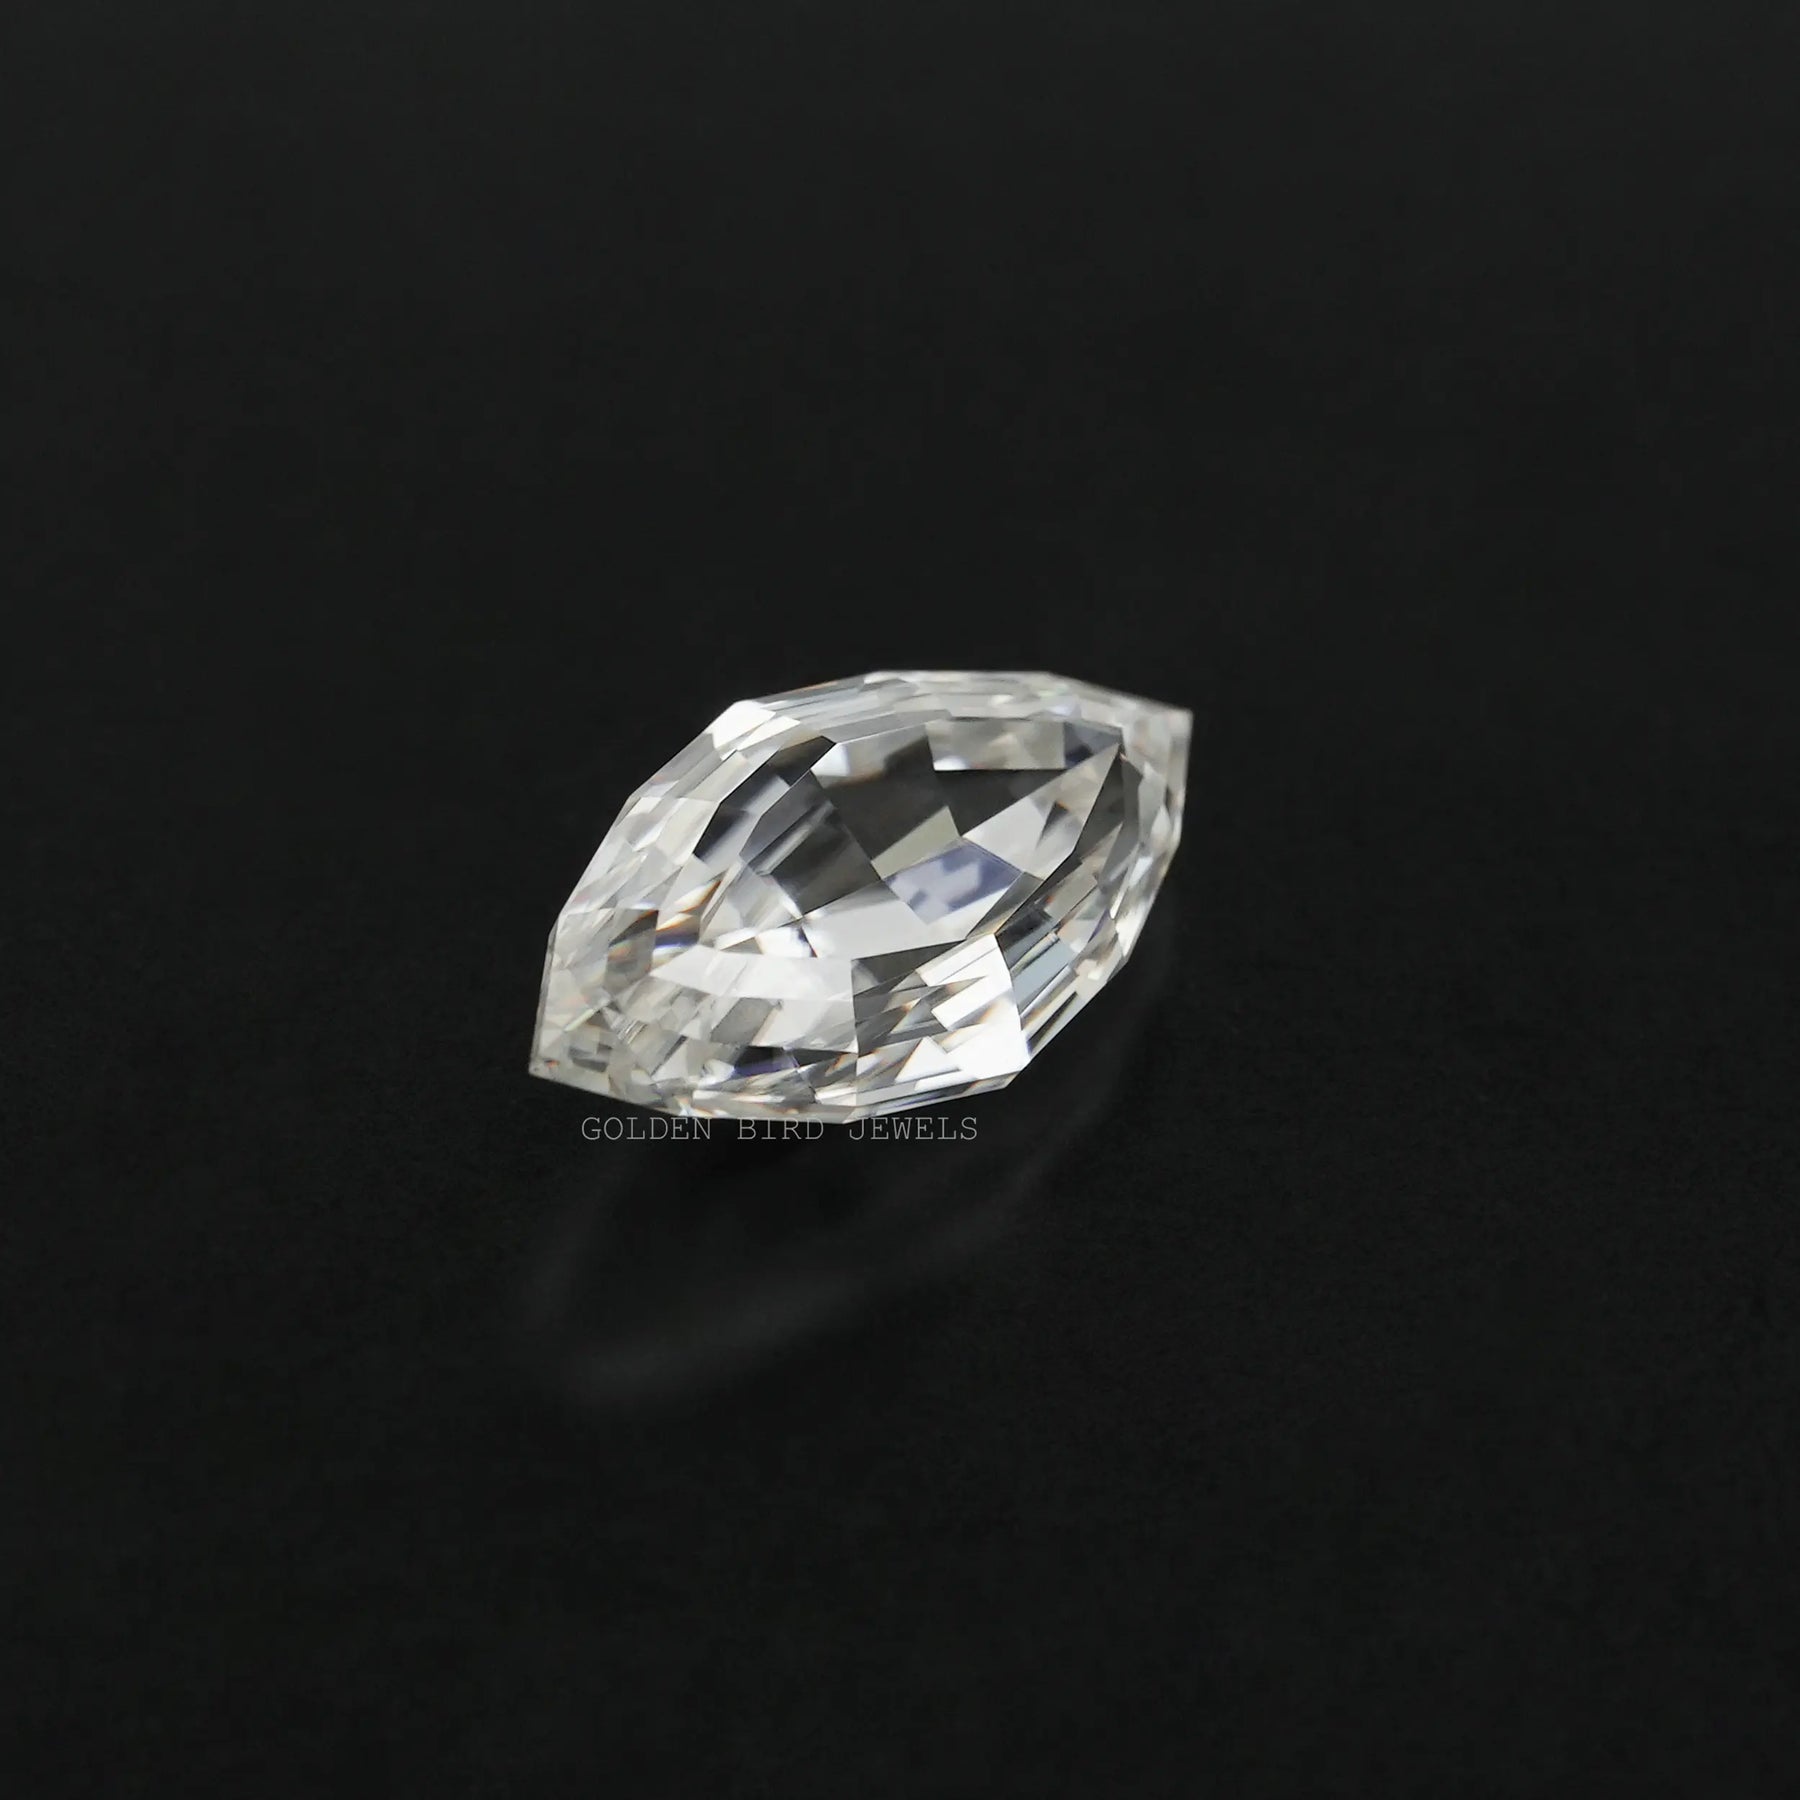 2.50 carat colorless step cut marquise shape loose moissanite diamond